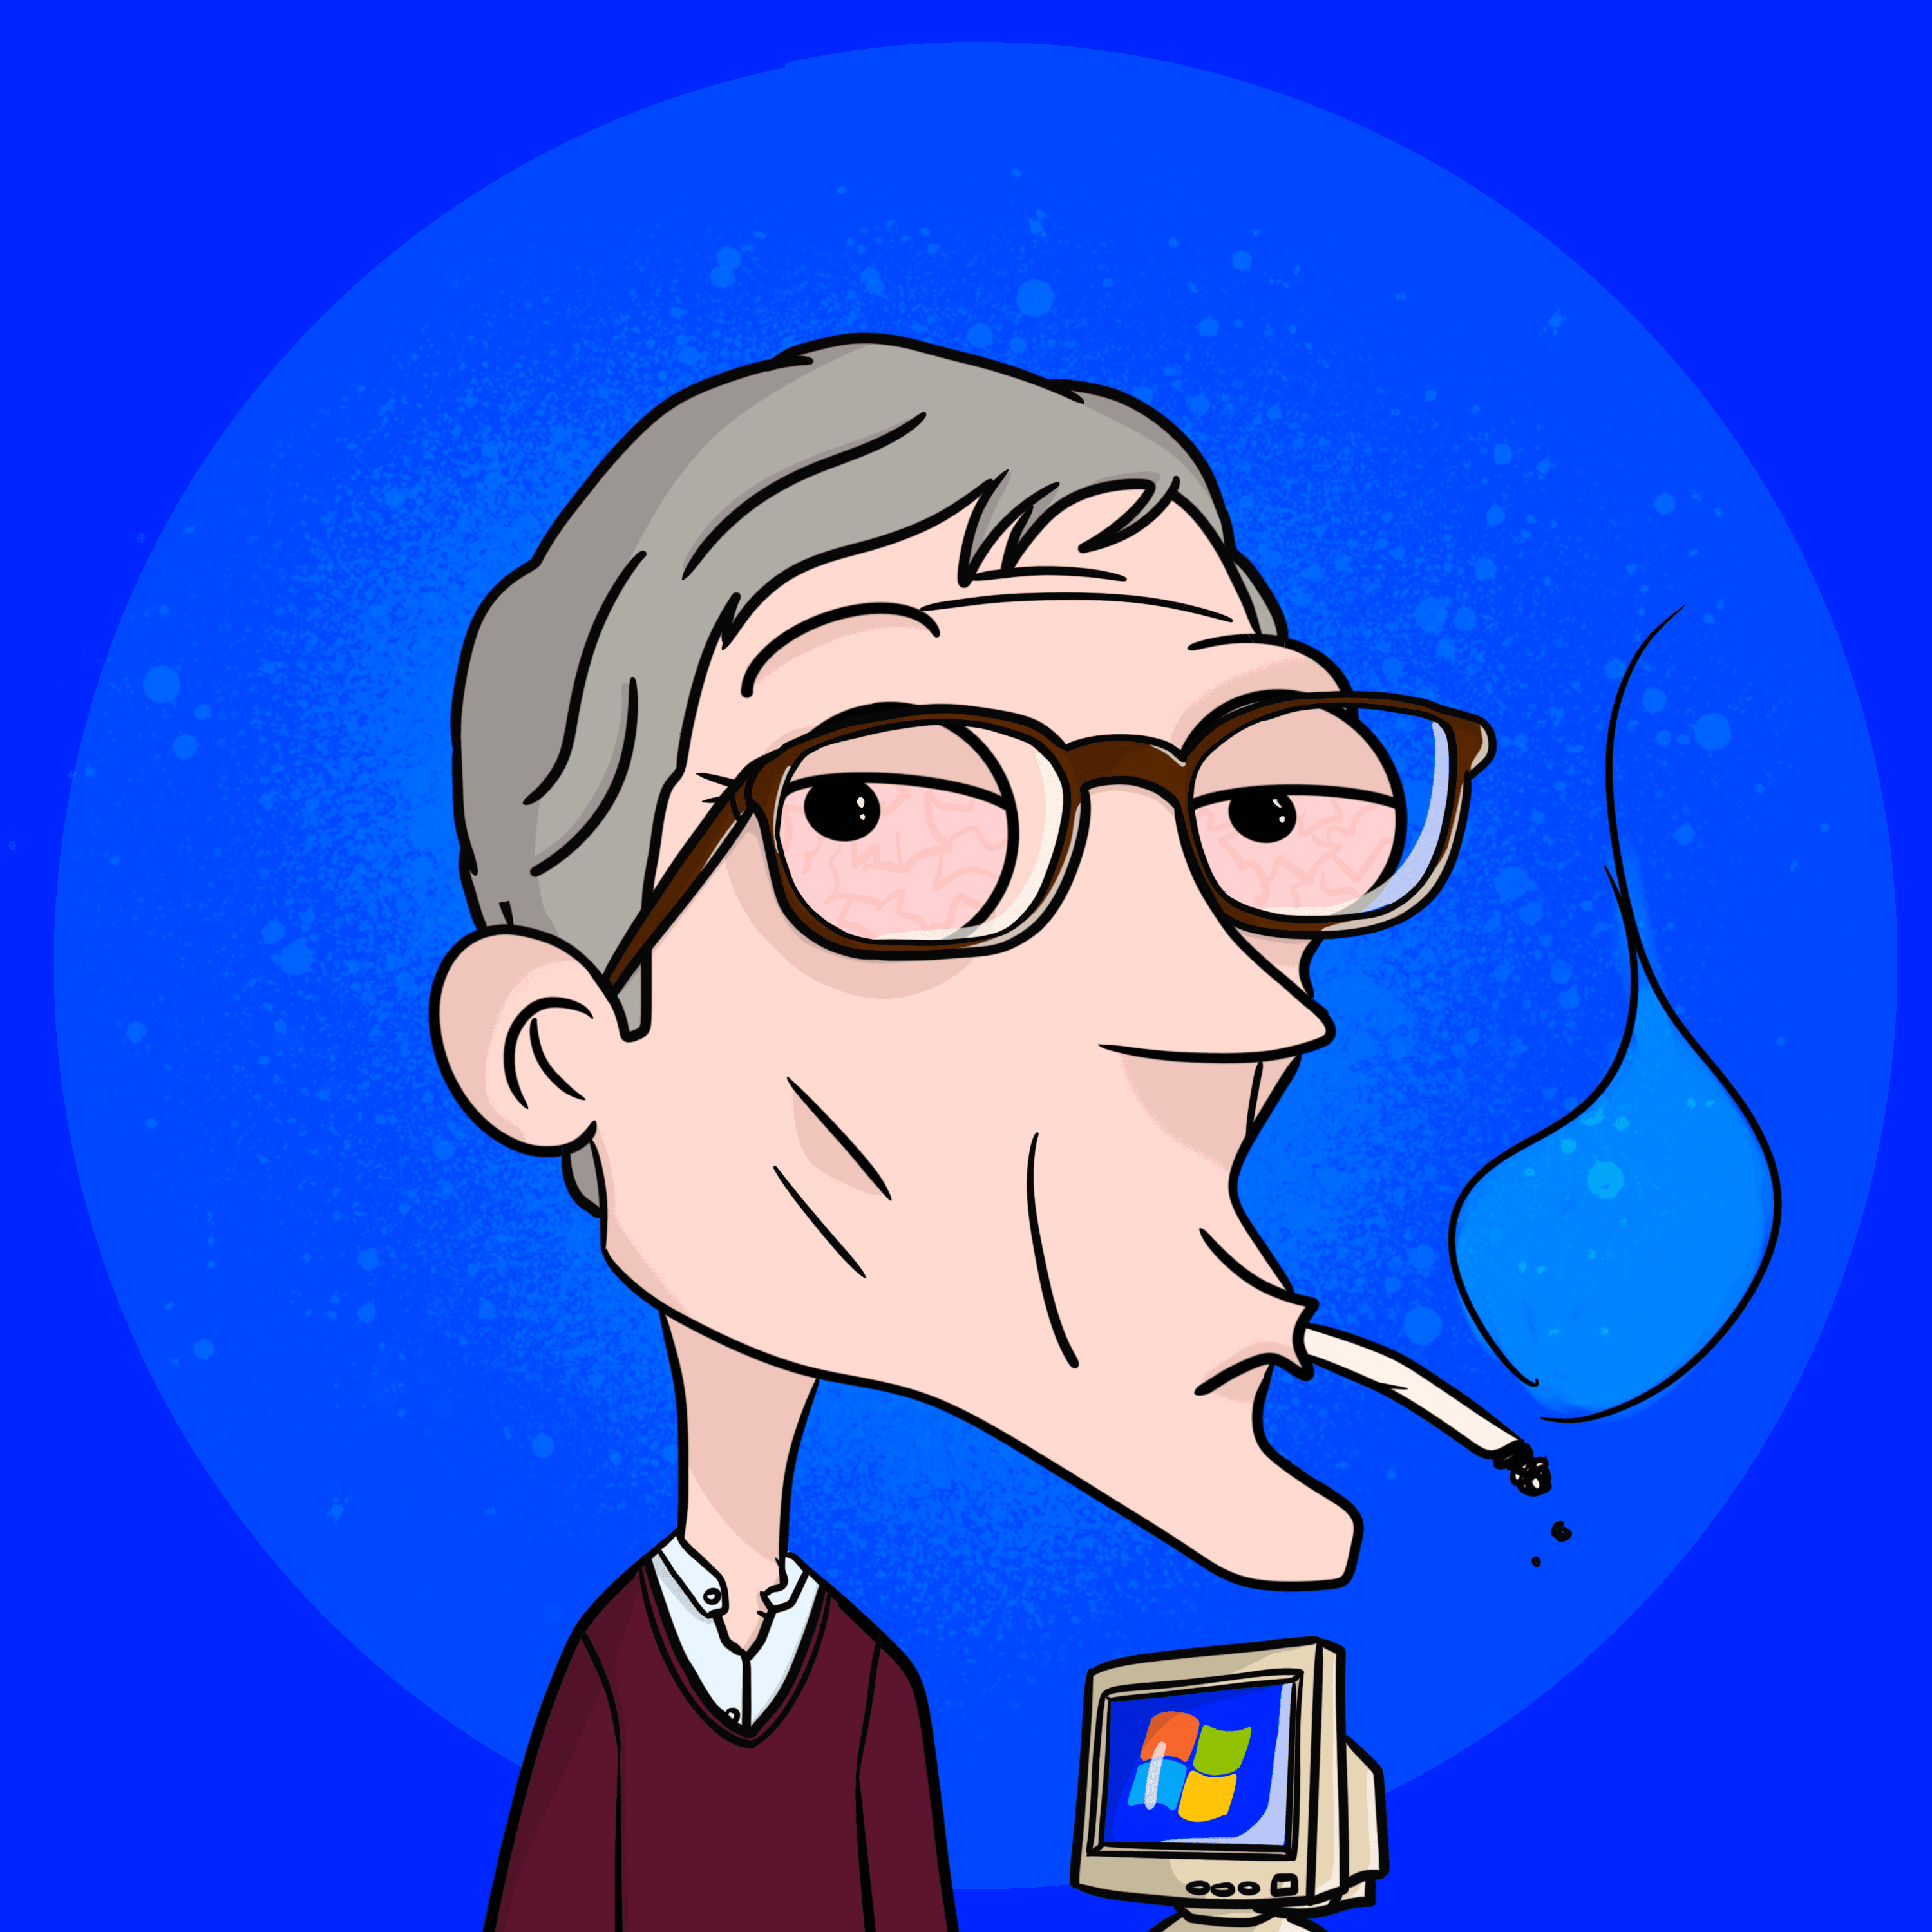 S1 - Bill Gates